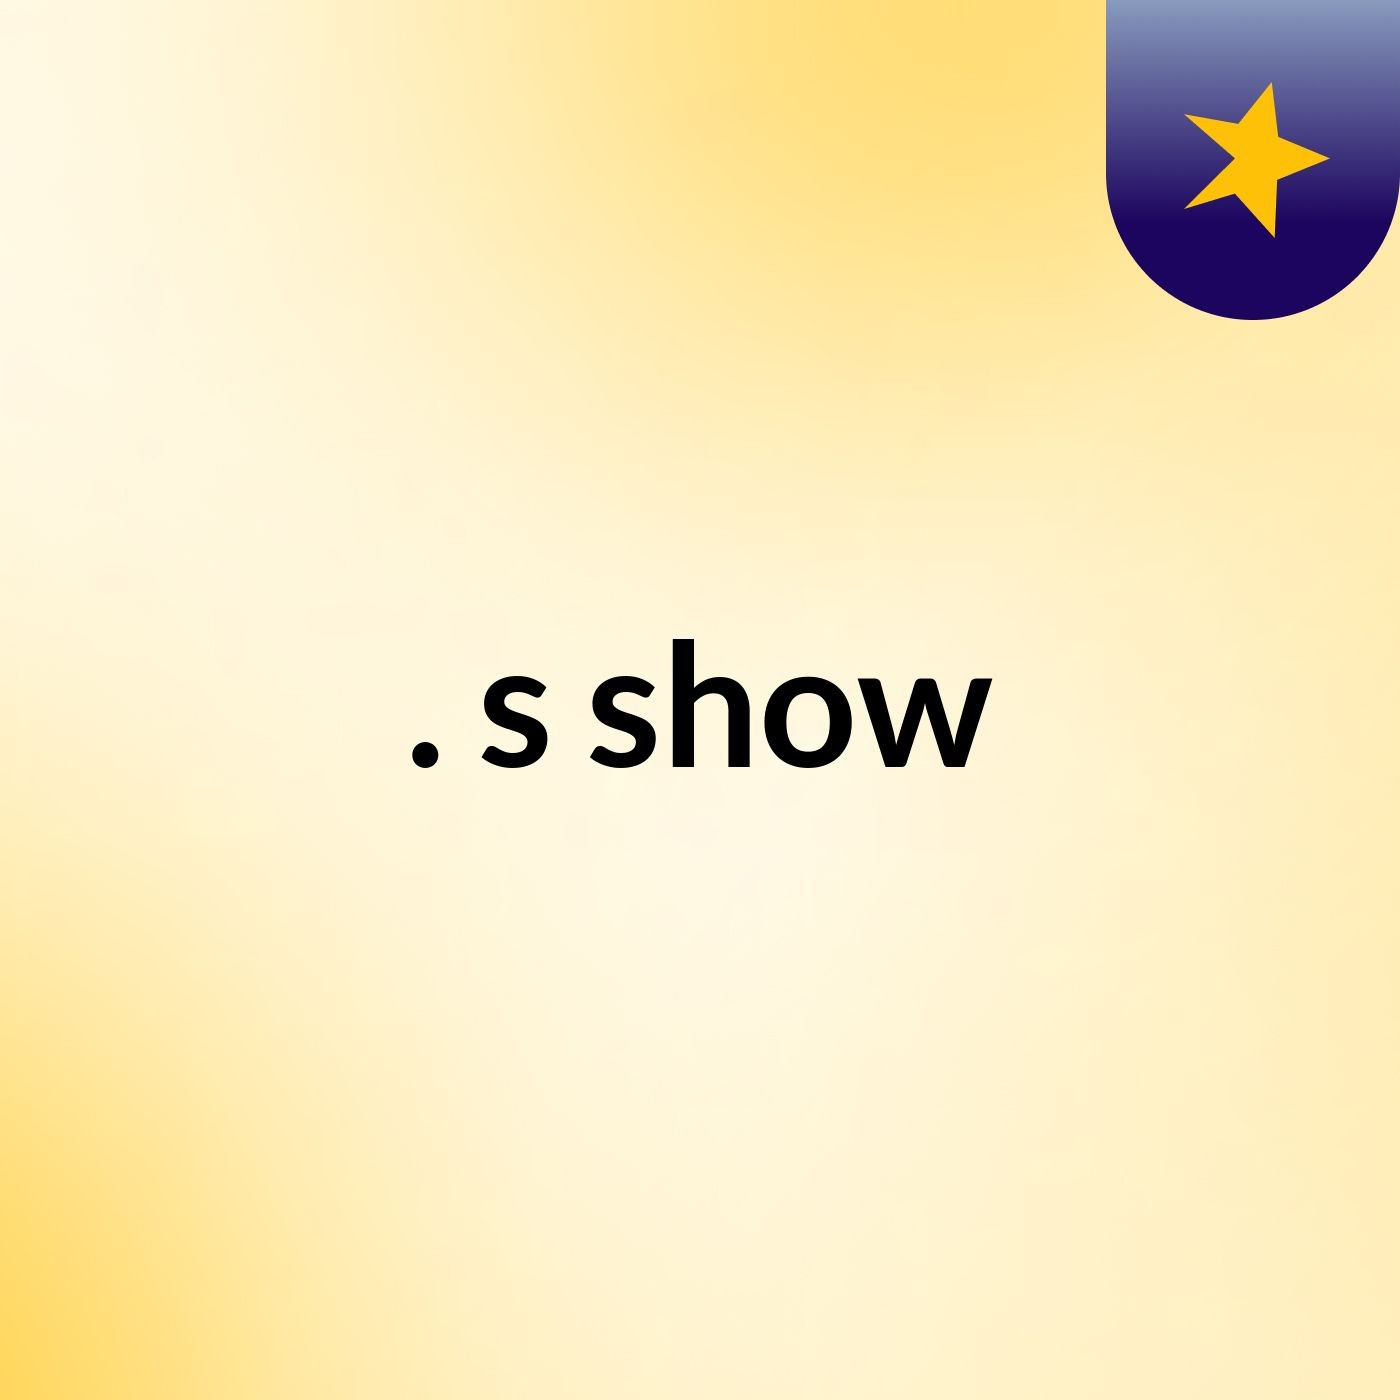 .'s show